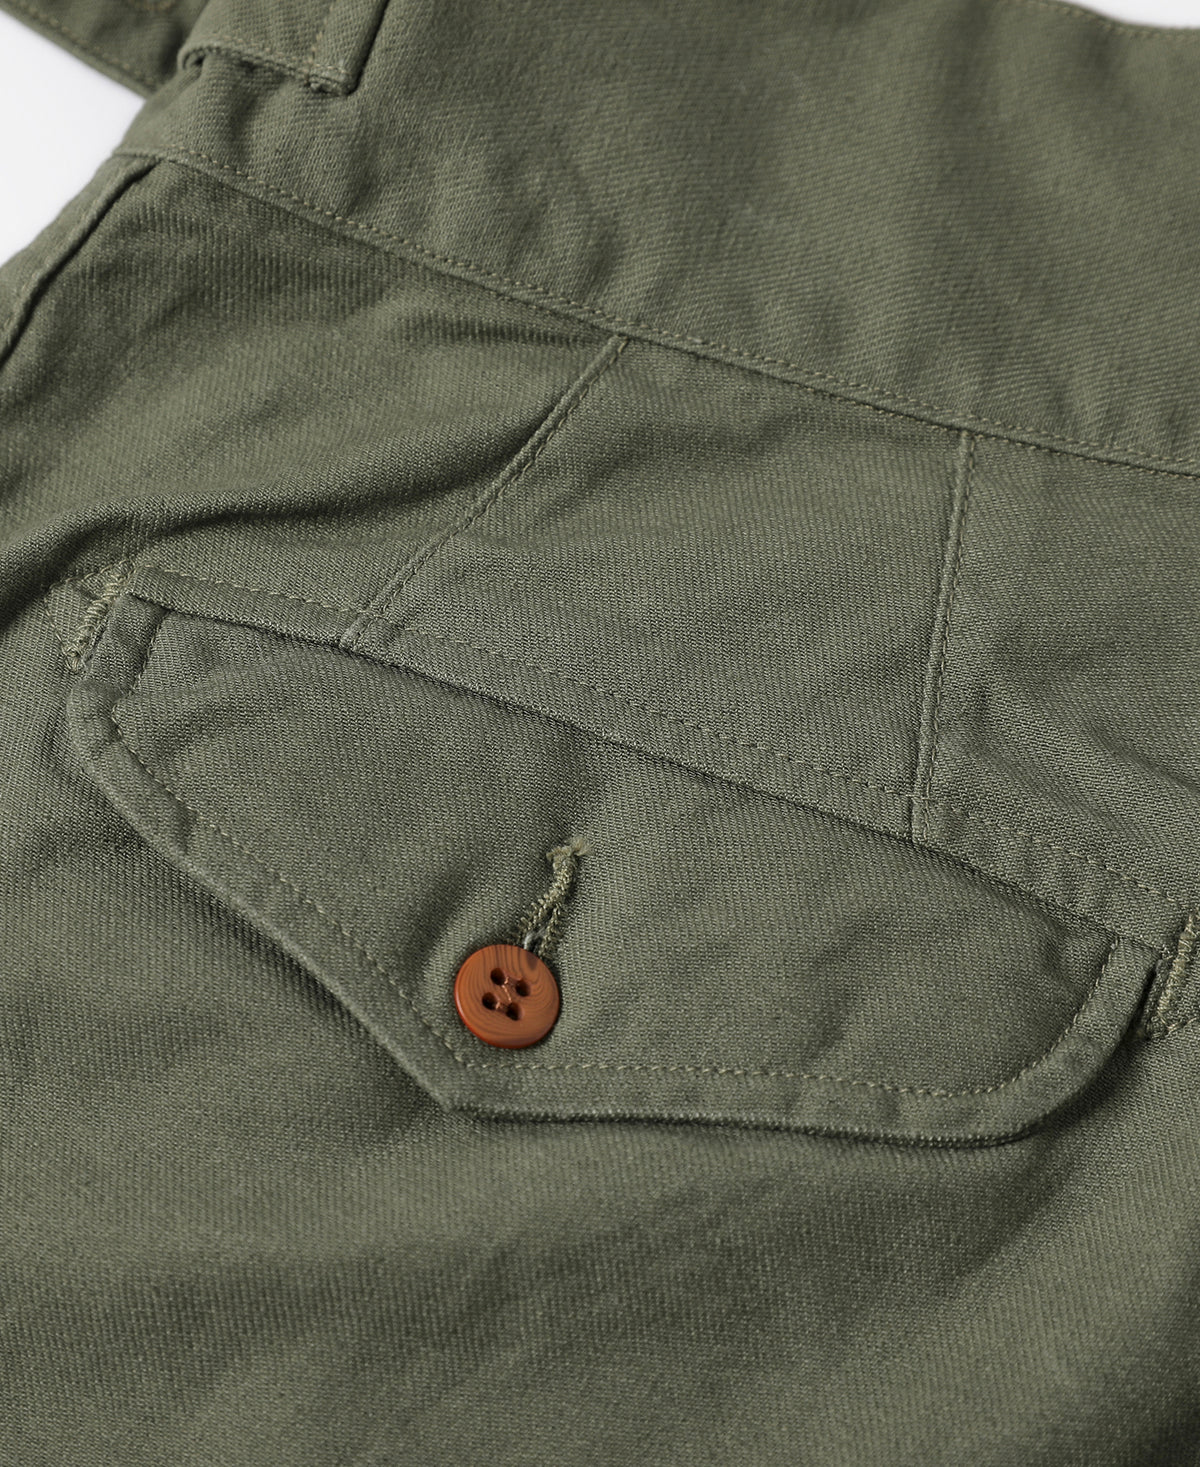 British Army Gurkha Bermuda Pants - Olive